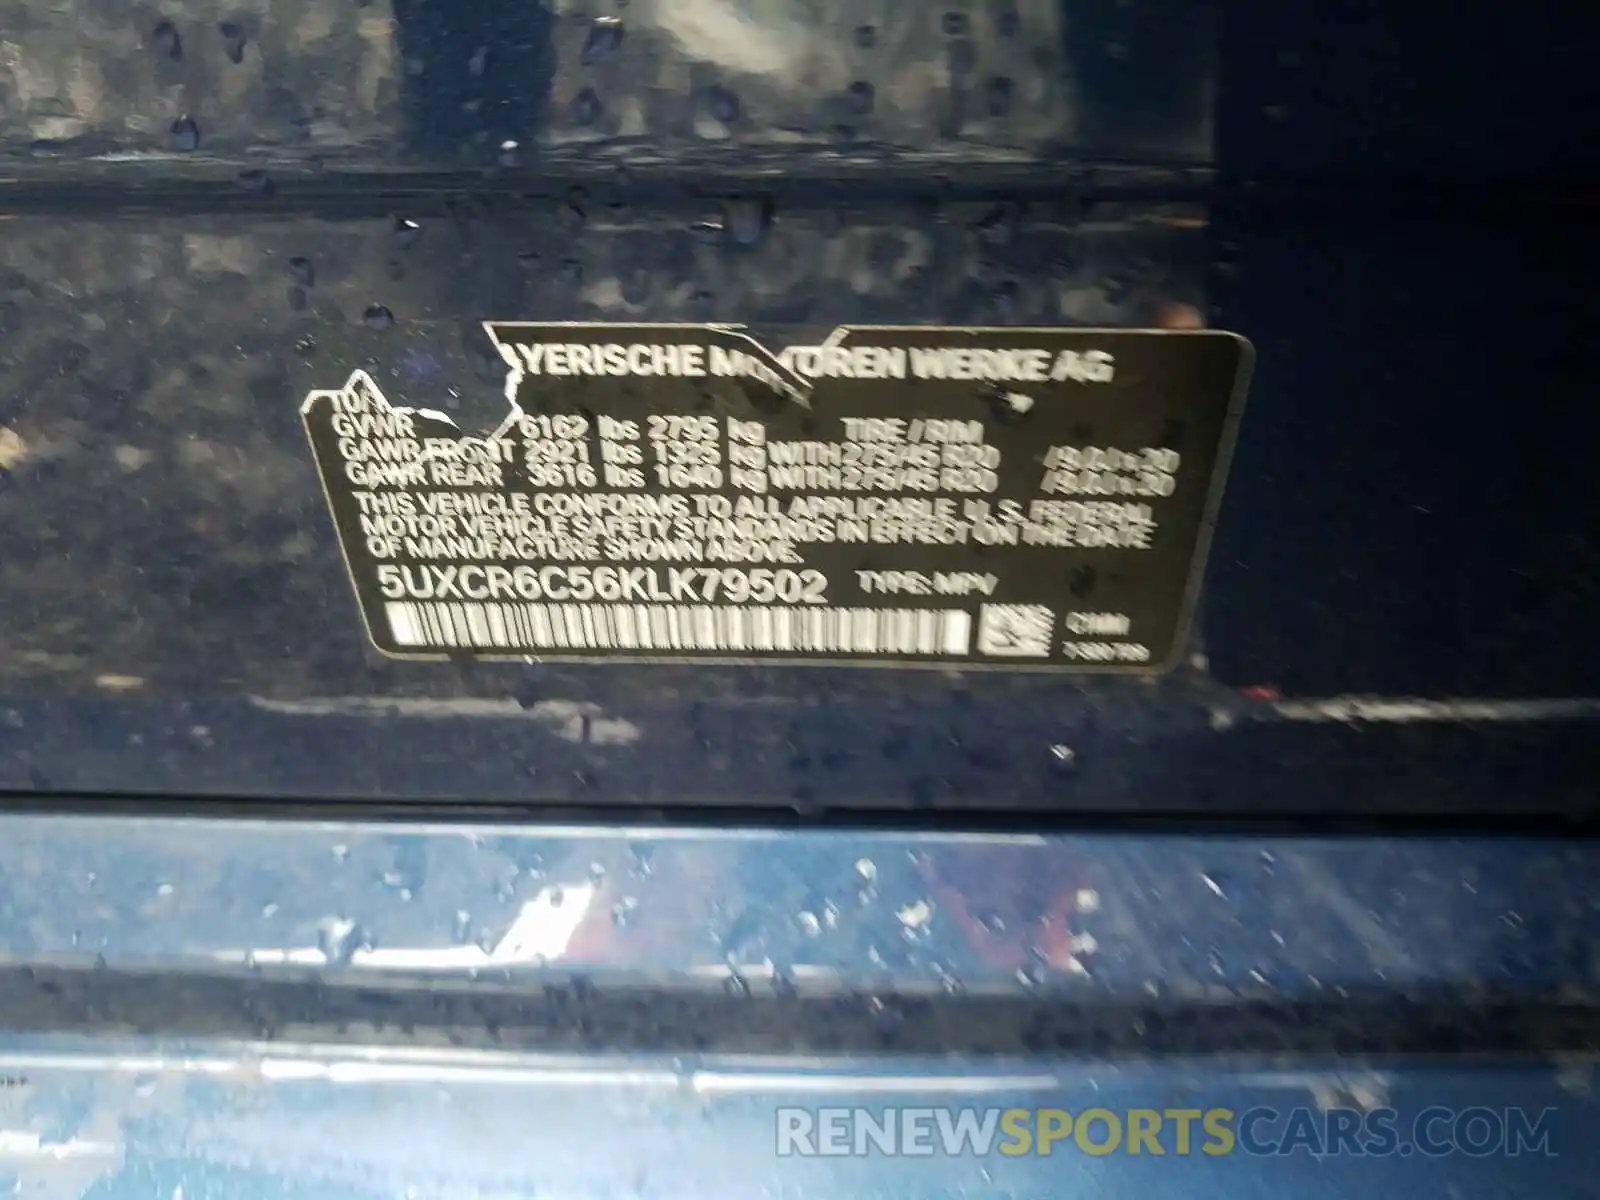 10 Photograph of a damaged car 5UXCR6C56KLK79502 BMW X5 2019